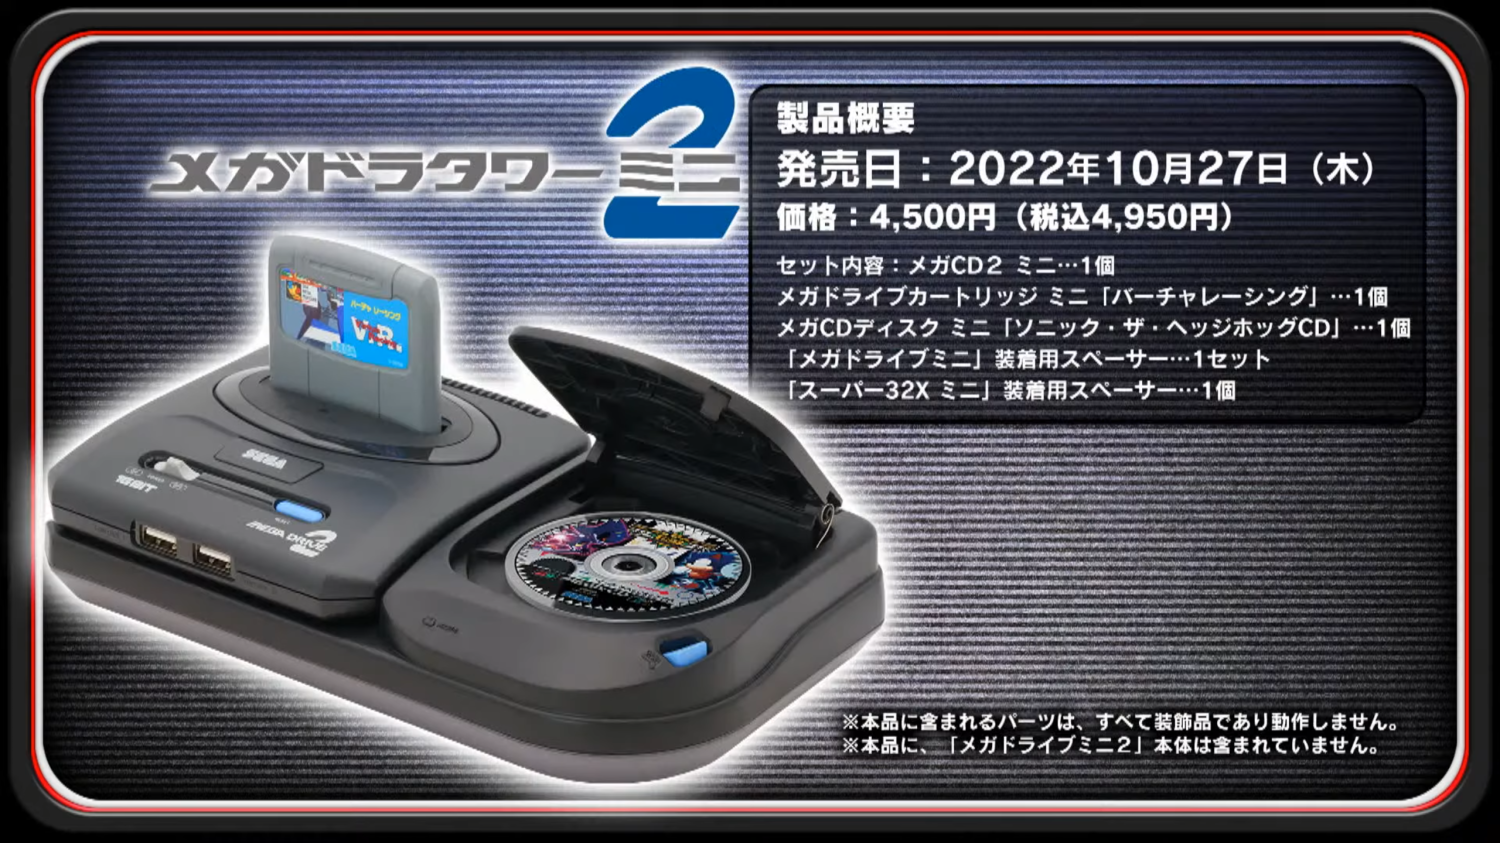 Sega's upcoming Mega Drive Mini 2 receiving twice as expensive